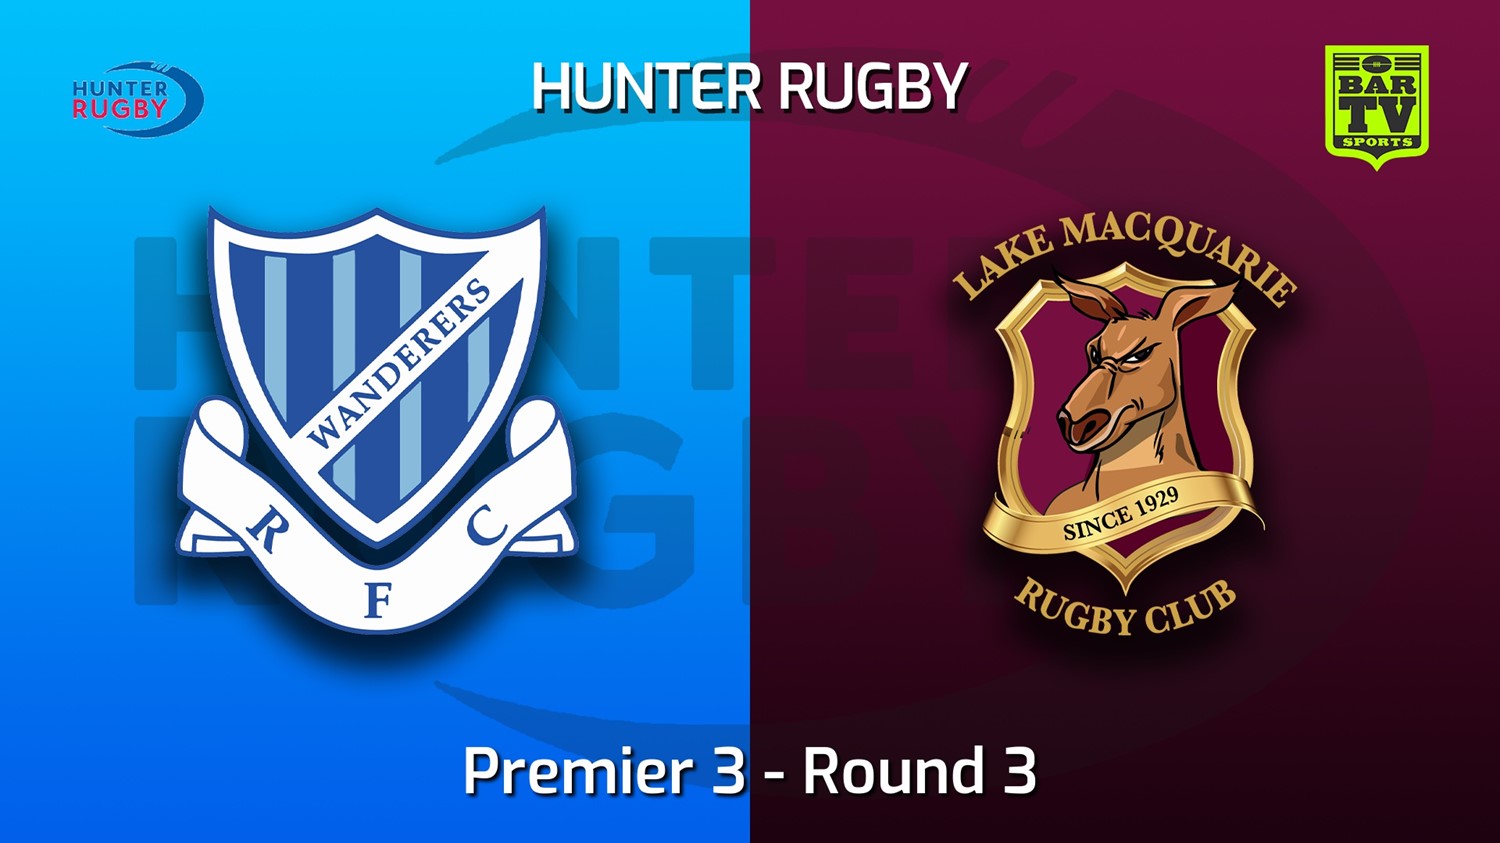 220507-Hunter Rugby Round 3 - Premier 3 - Wanderers v Lake Macquarie Slate Image